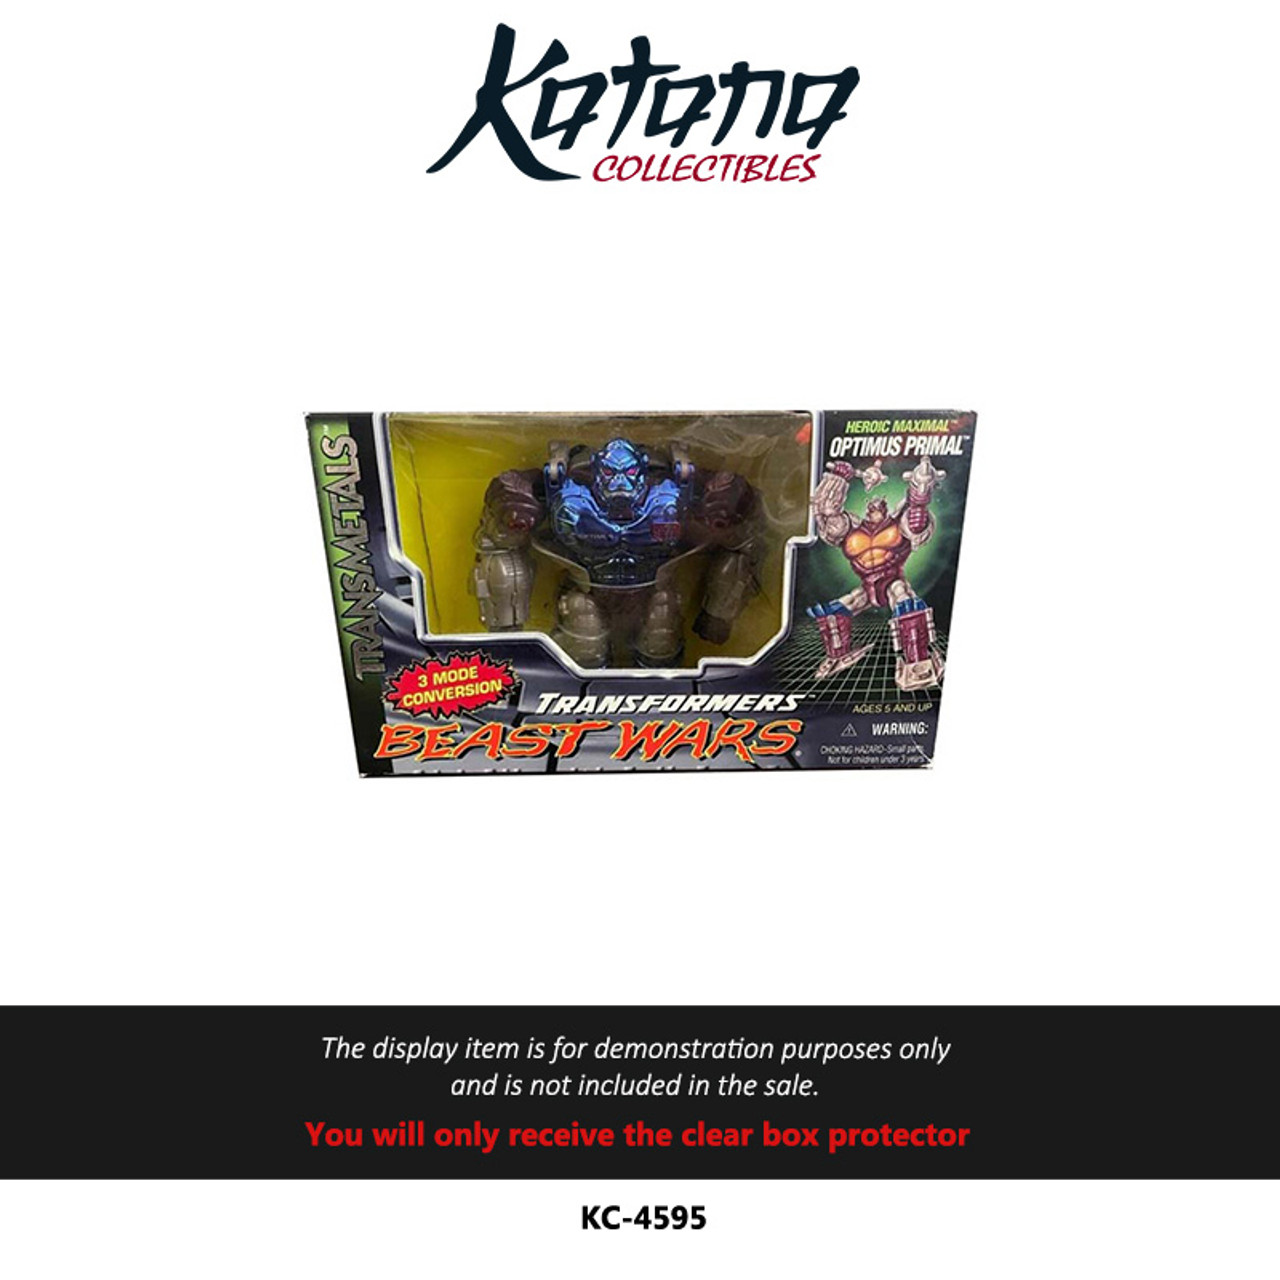 Katana Collectibles Protector For Beast Wars Transmetal Optimus Primal.